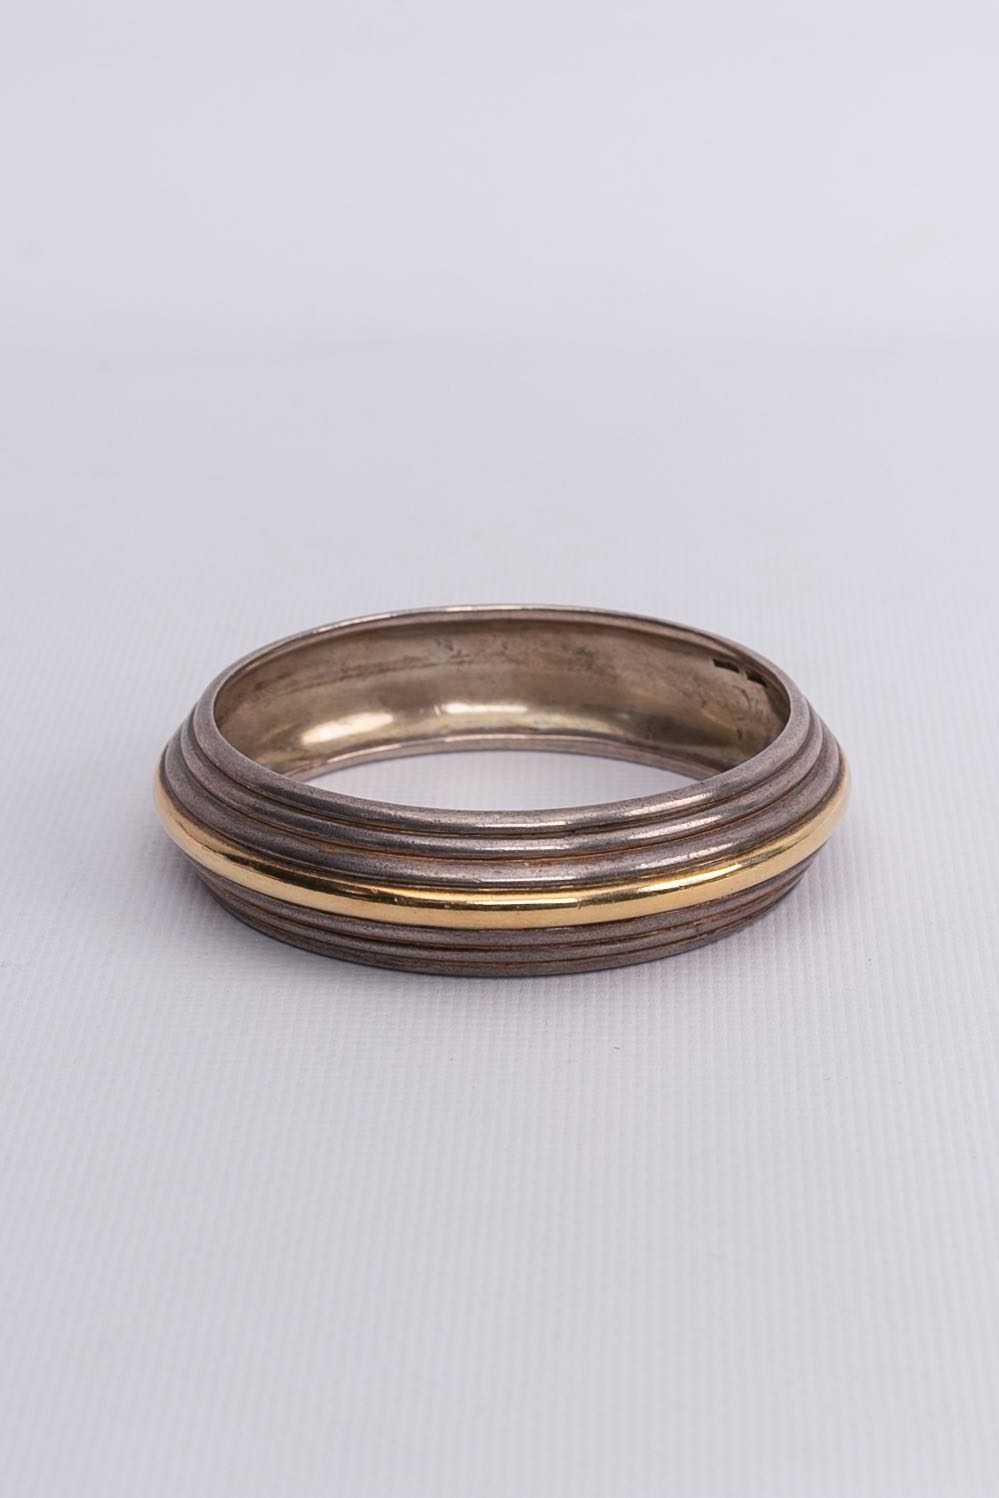 Hermès gold and silver bracelet